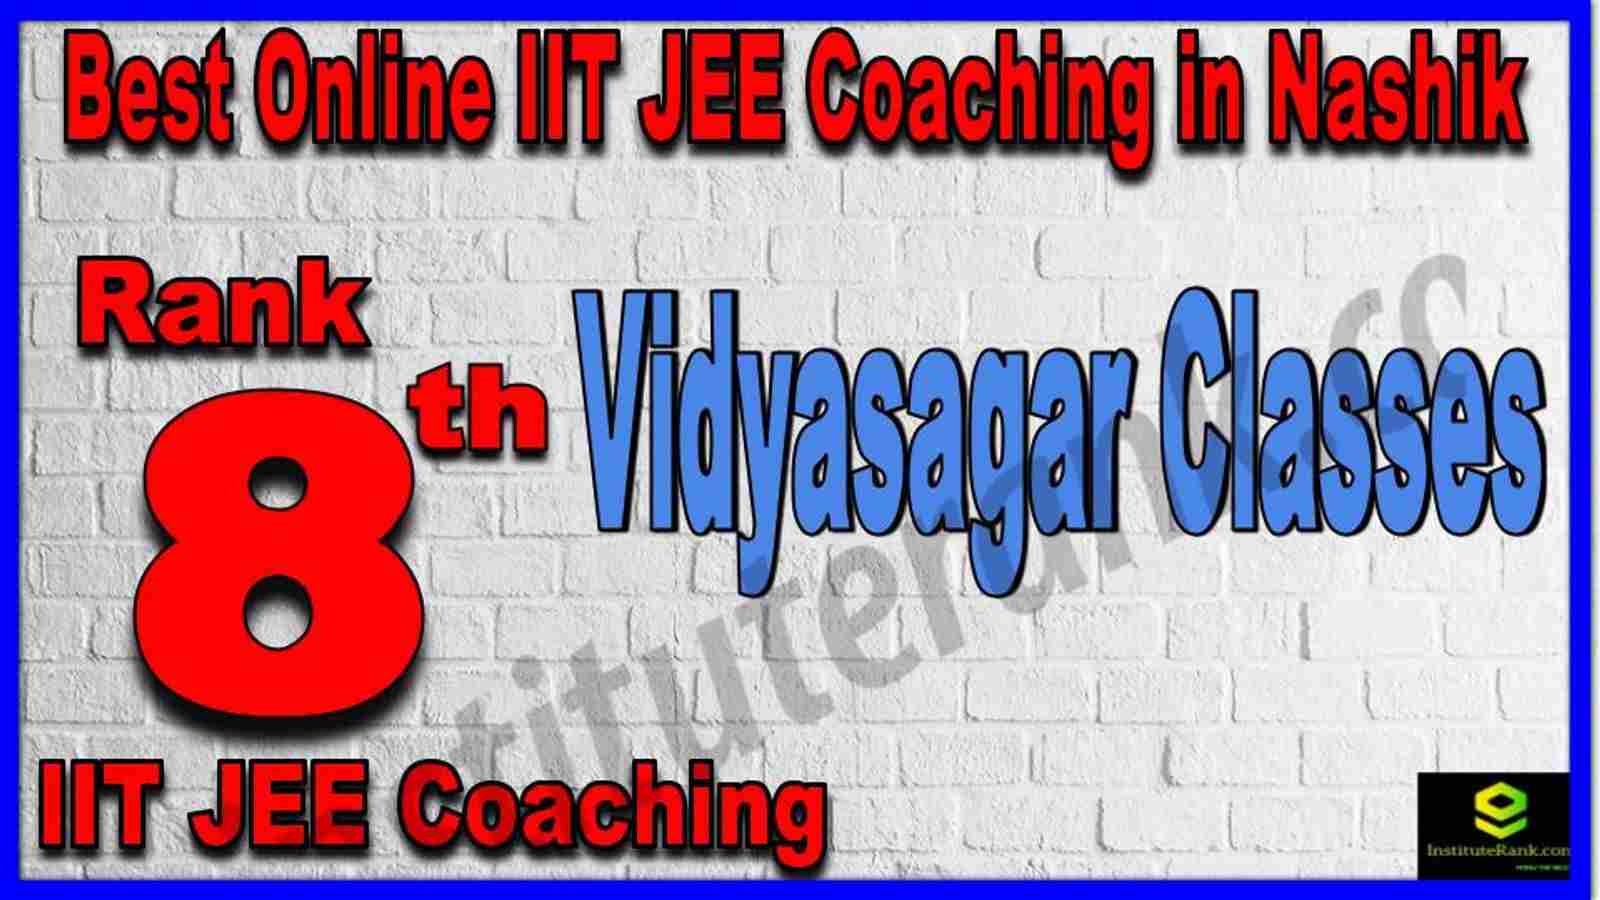 Rank 8th Best Online IIT JEE Coaching in Nashik